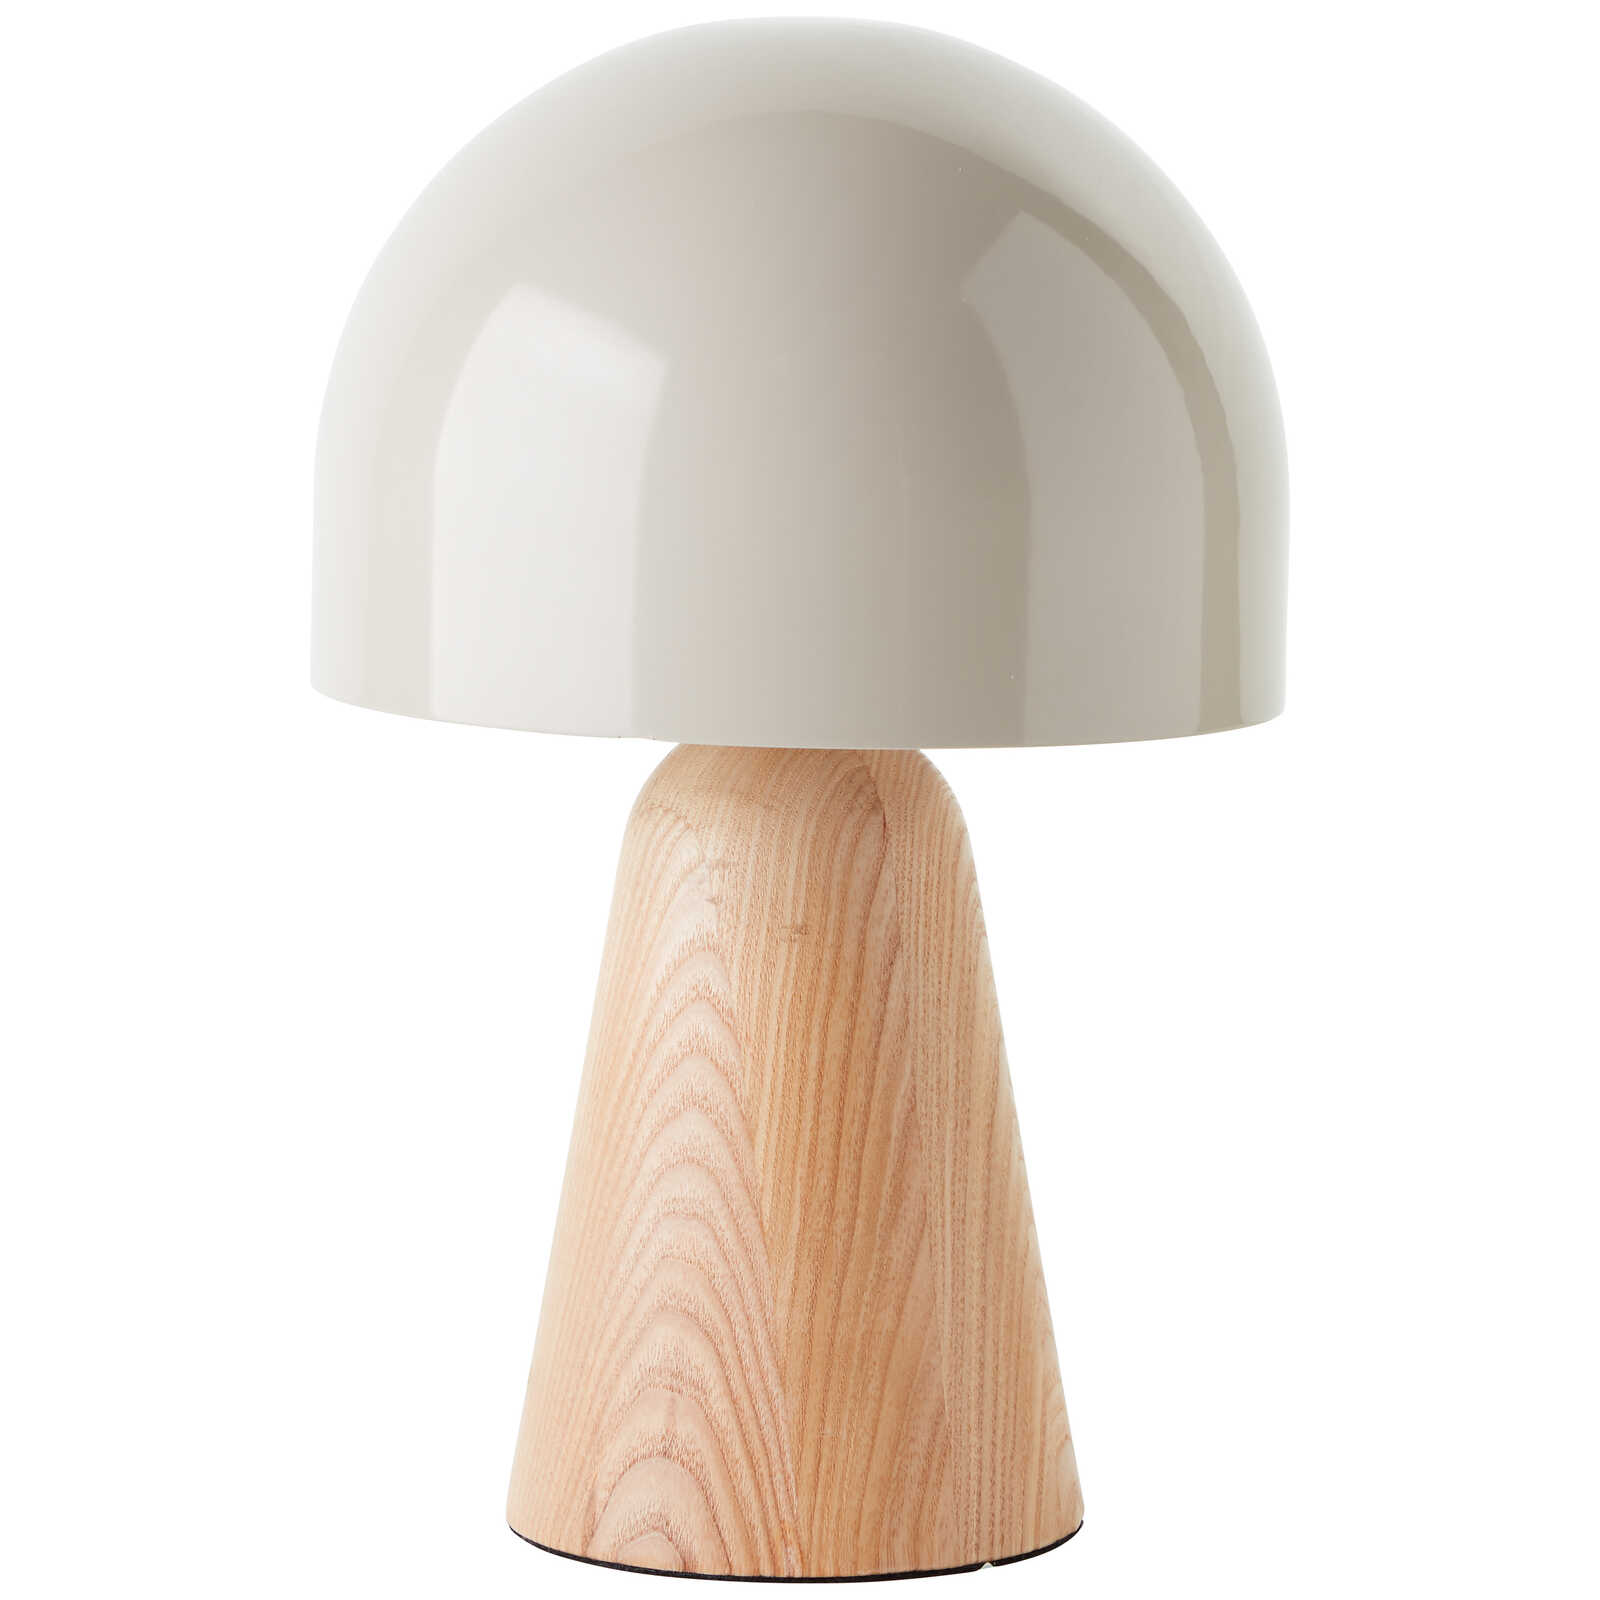             Wooden table lamp - Lorena 4 - Beige
        